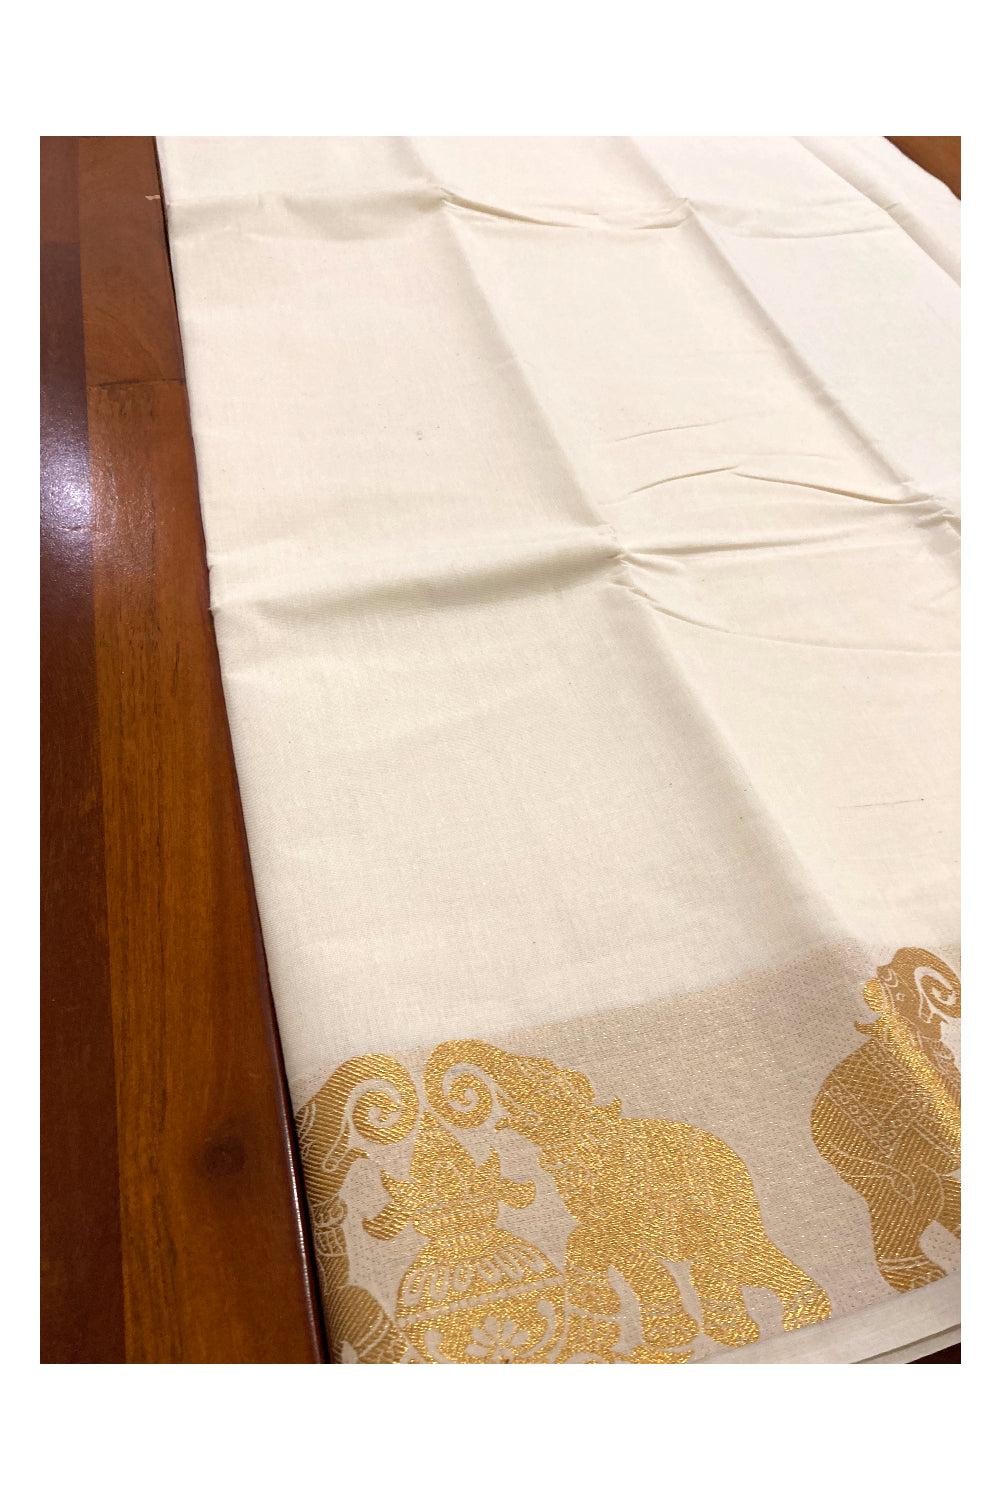 Kerala Plain Cotton Skirt Material with Kasavu Woven Border (4 meters)